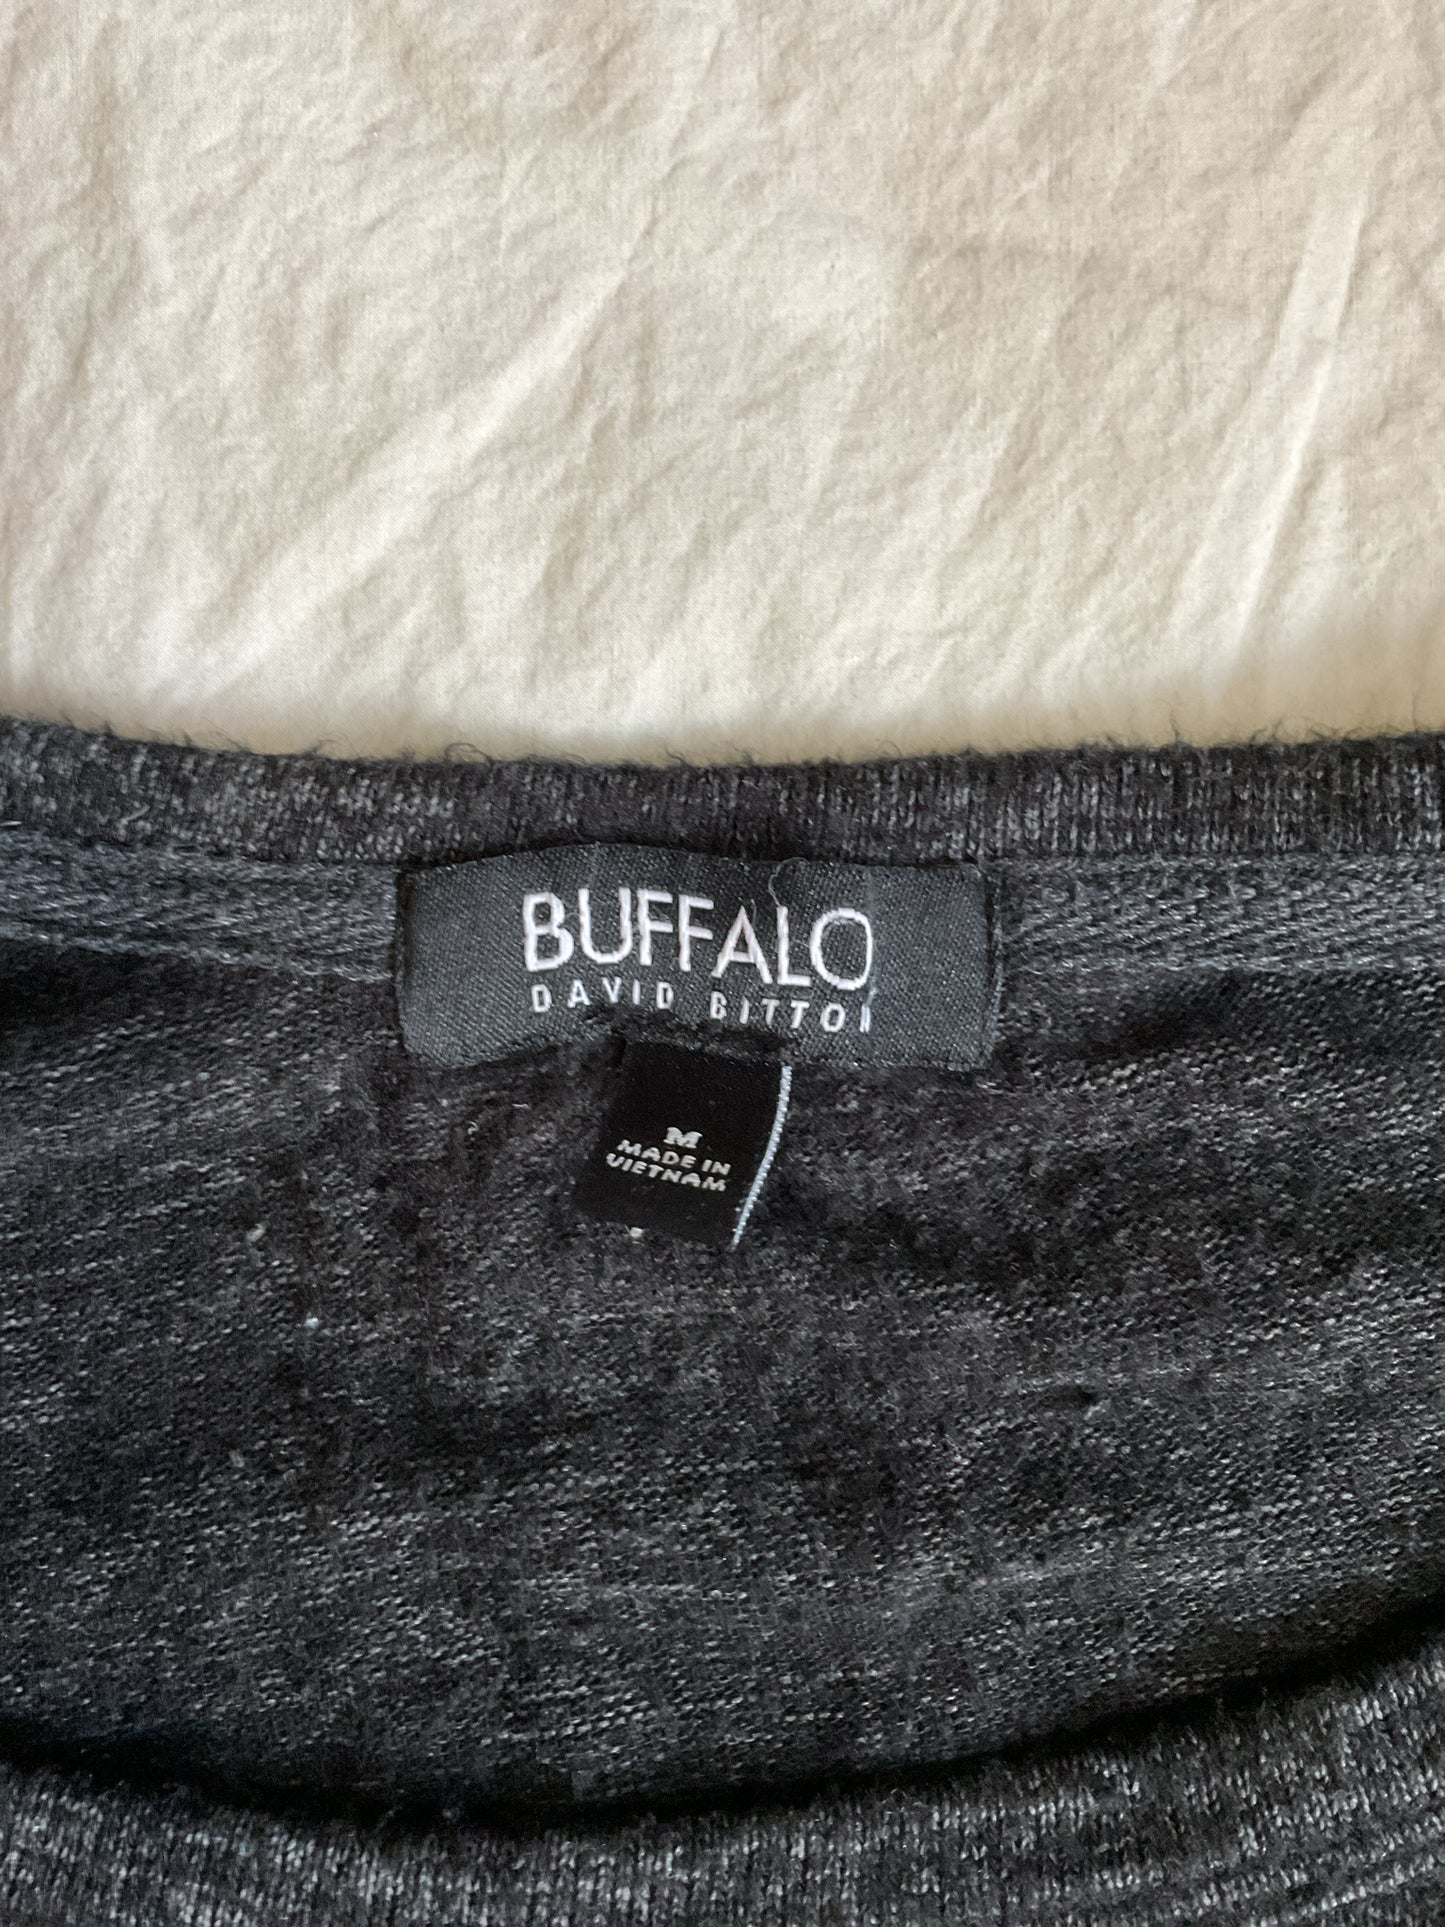 Buffalo Crewneck Sweatshirt Women's M